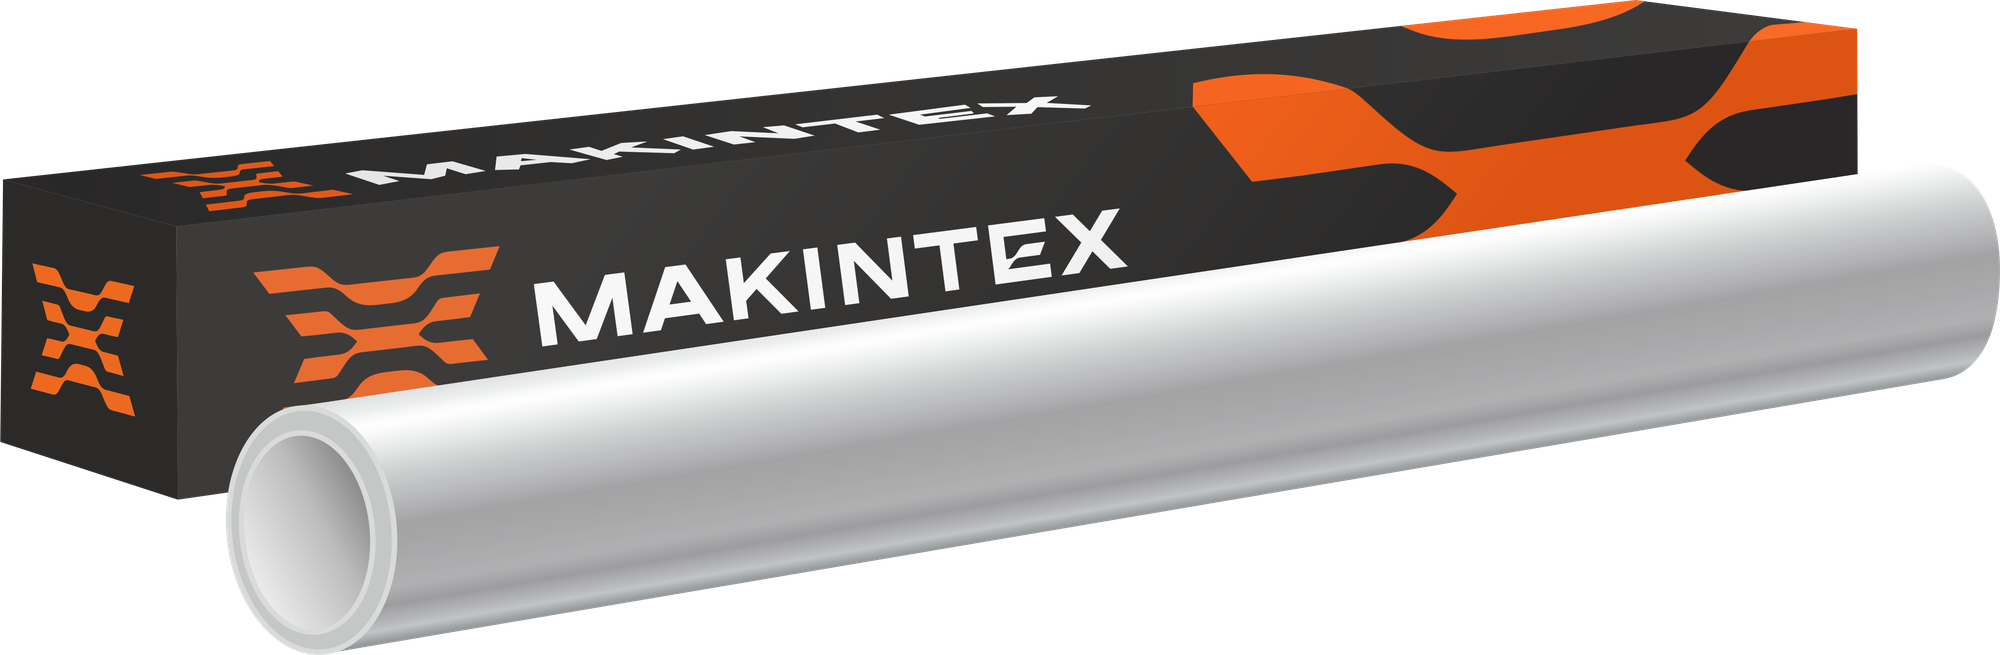 Плёнка защитная антигравийная MAKINTEX ARMOR CLEAR 1.52х15м Прозрачная(полиуретановая) для защиты кузова от царапин и сколов.